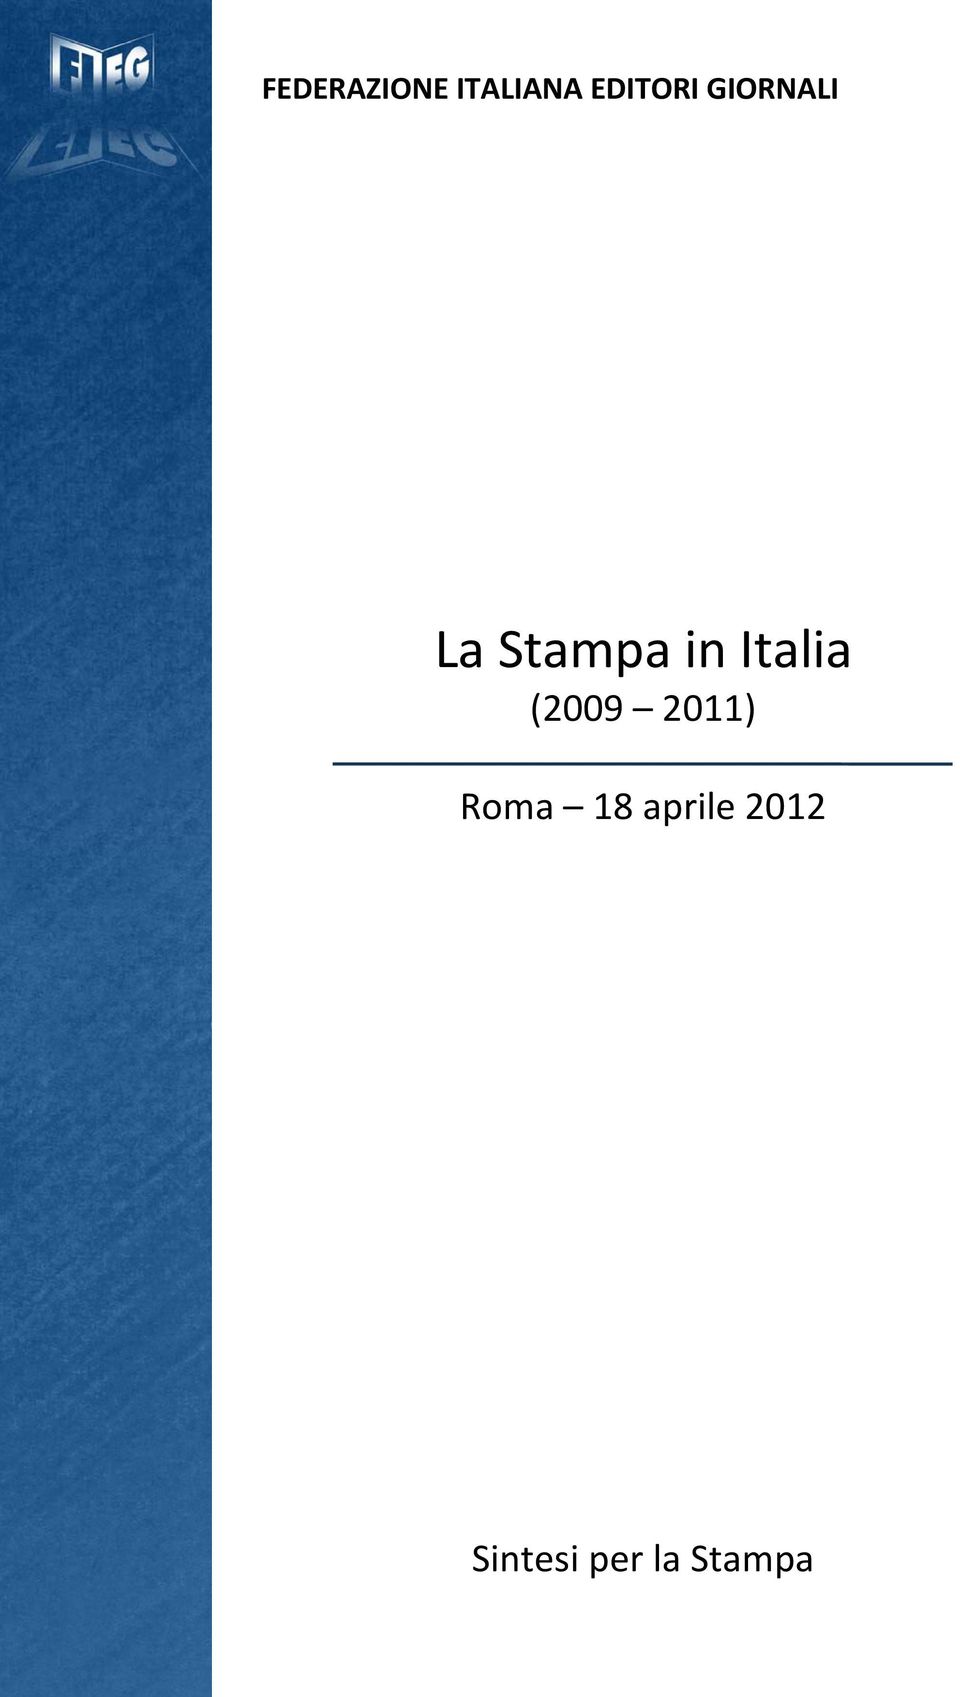 Stampa in Italia (2009